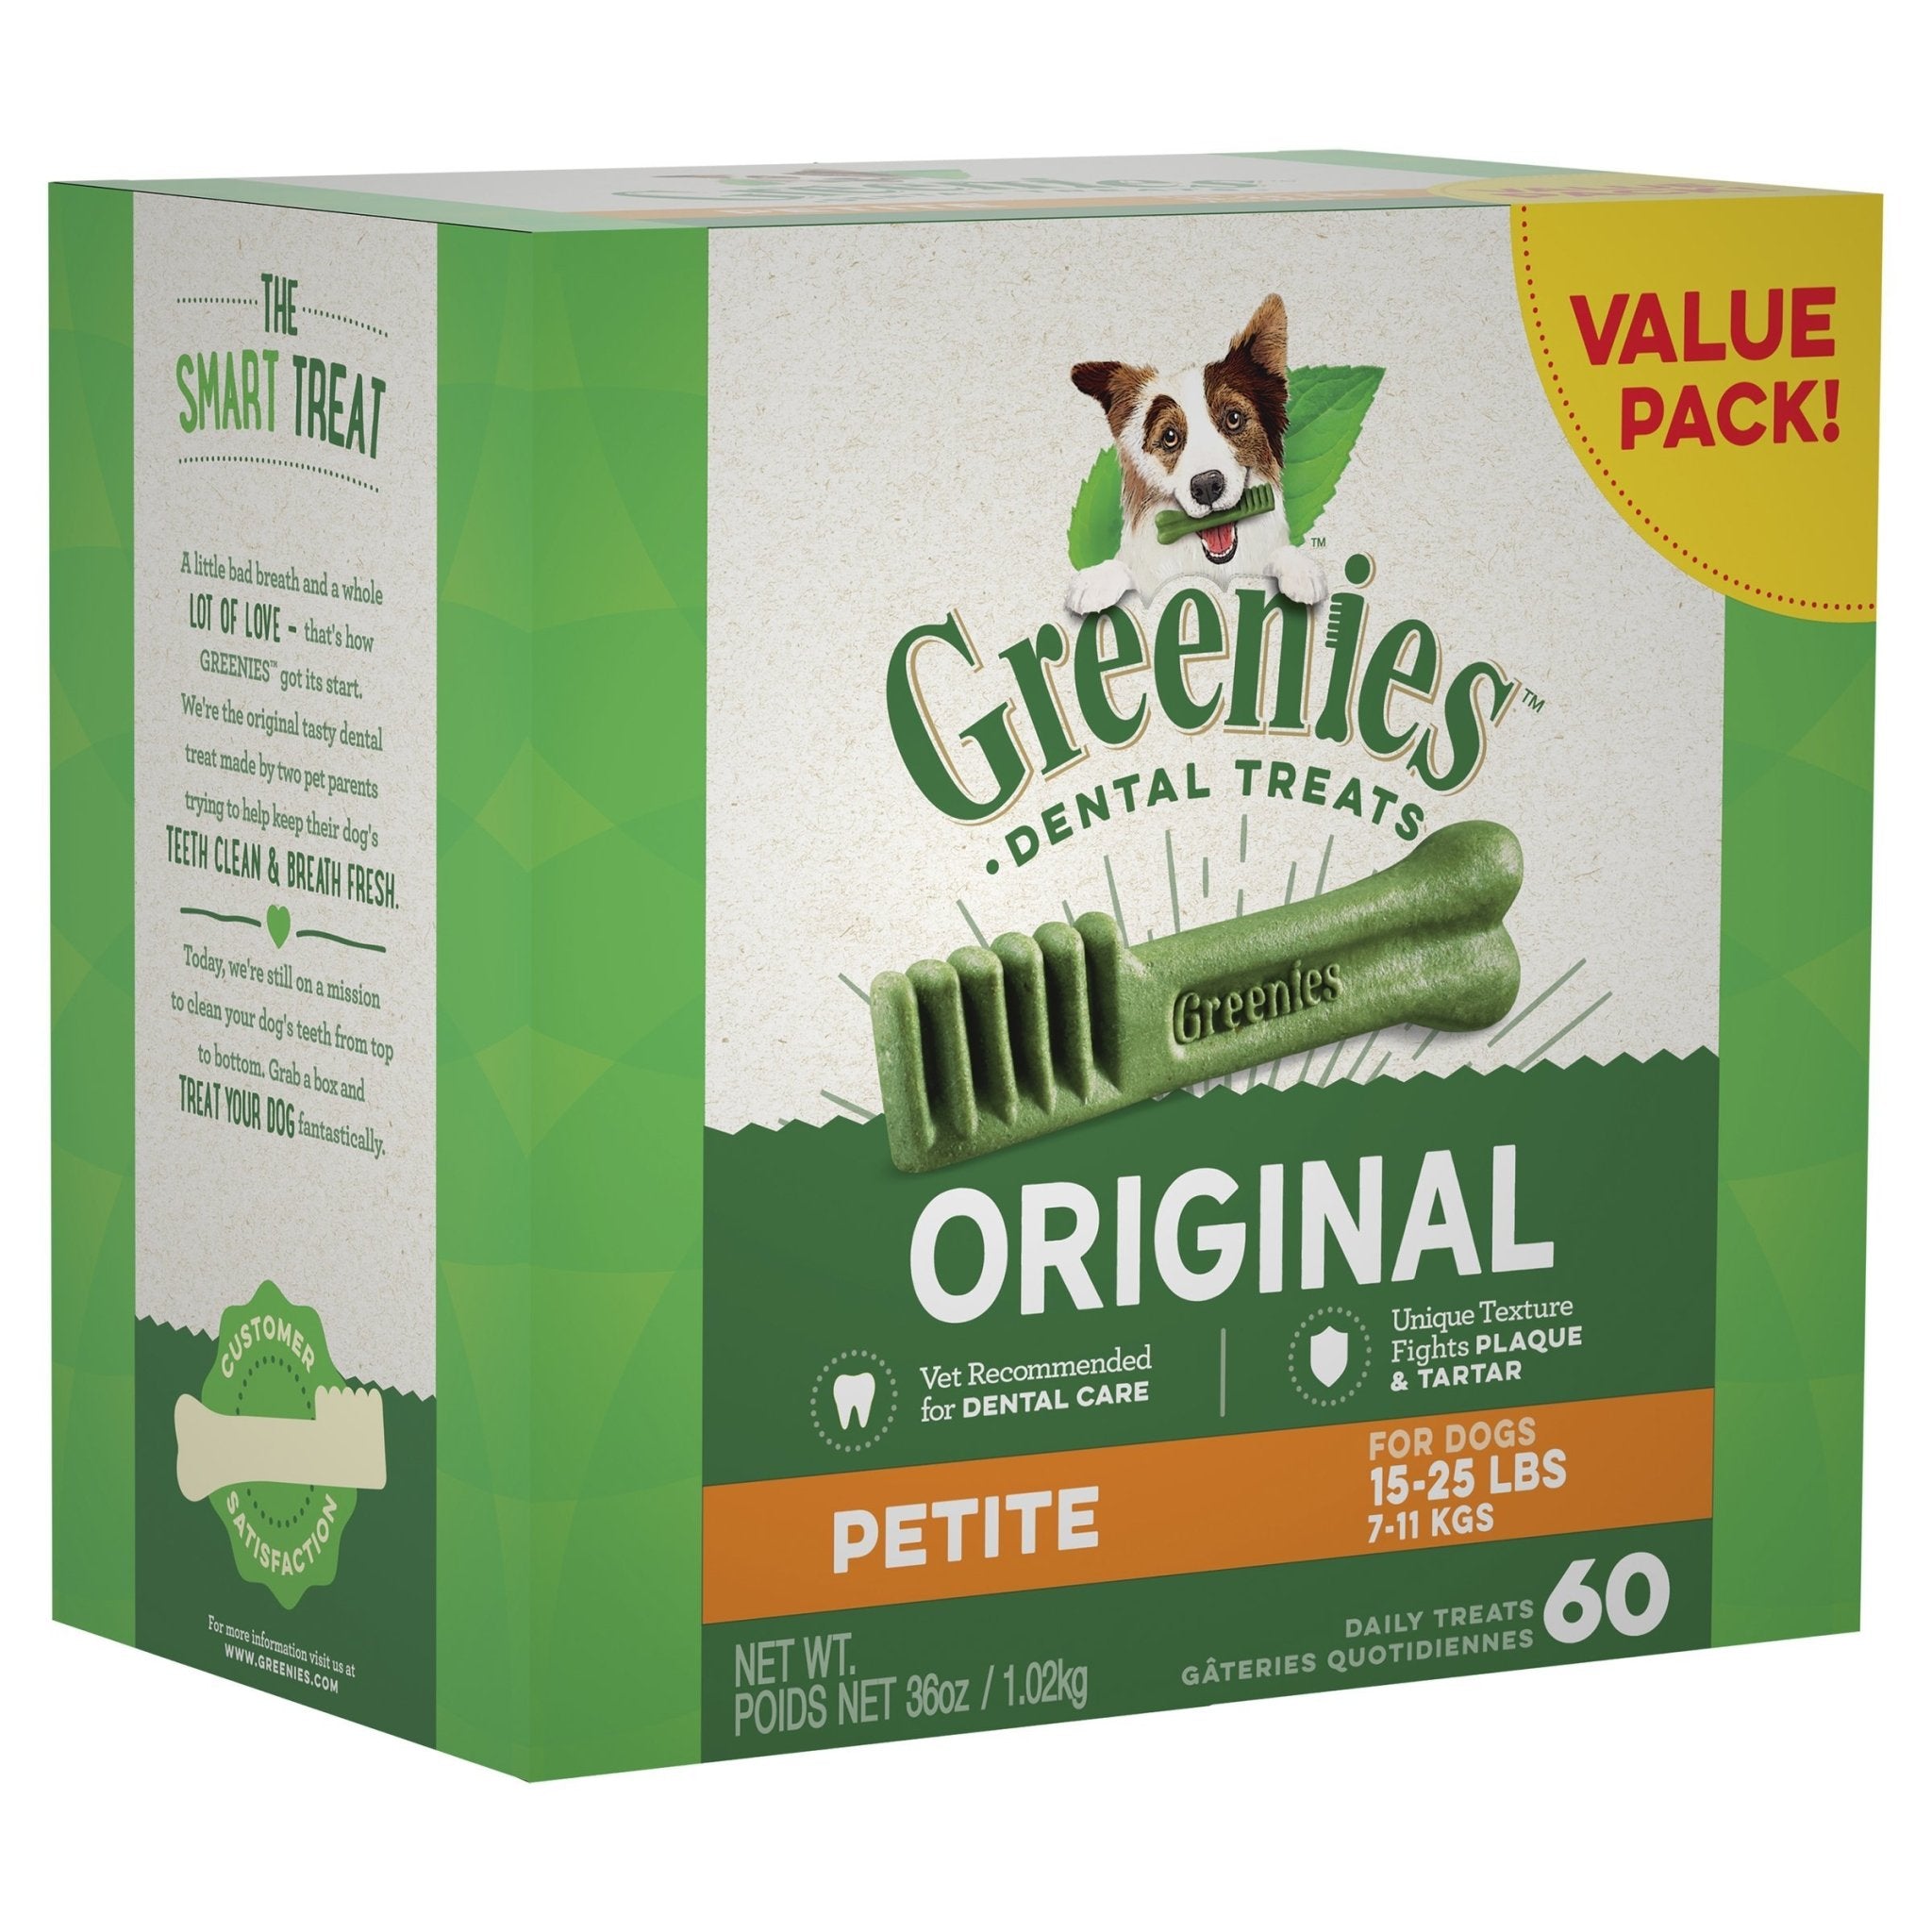 GREENIES™ Original Petite Dental Dog Treat 60 Value Pack 1.02kg